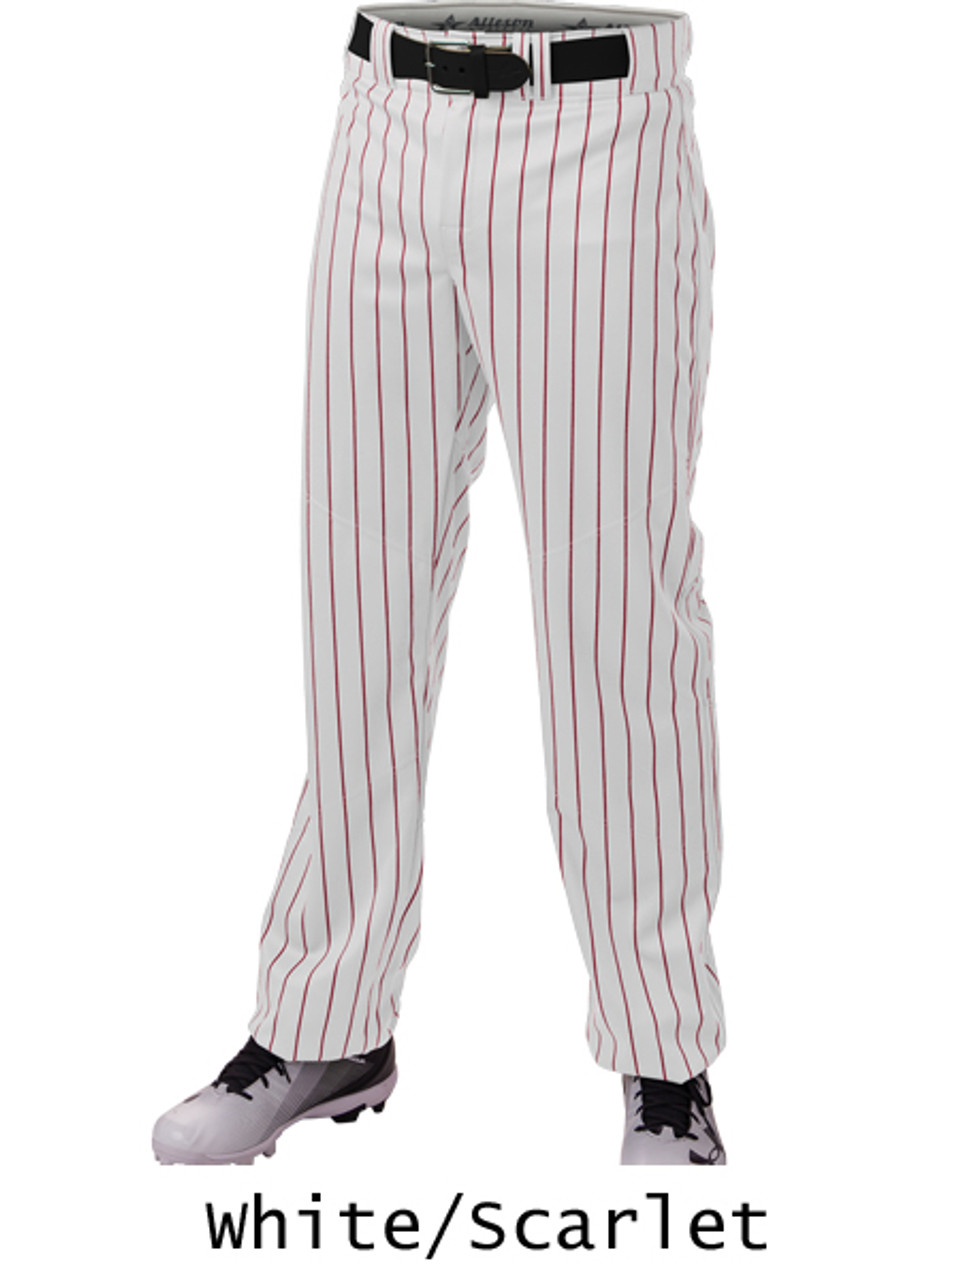 Adult 14 oz Expert Pinstripe Baseball Pants - All Sports Uniforms